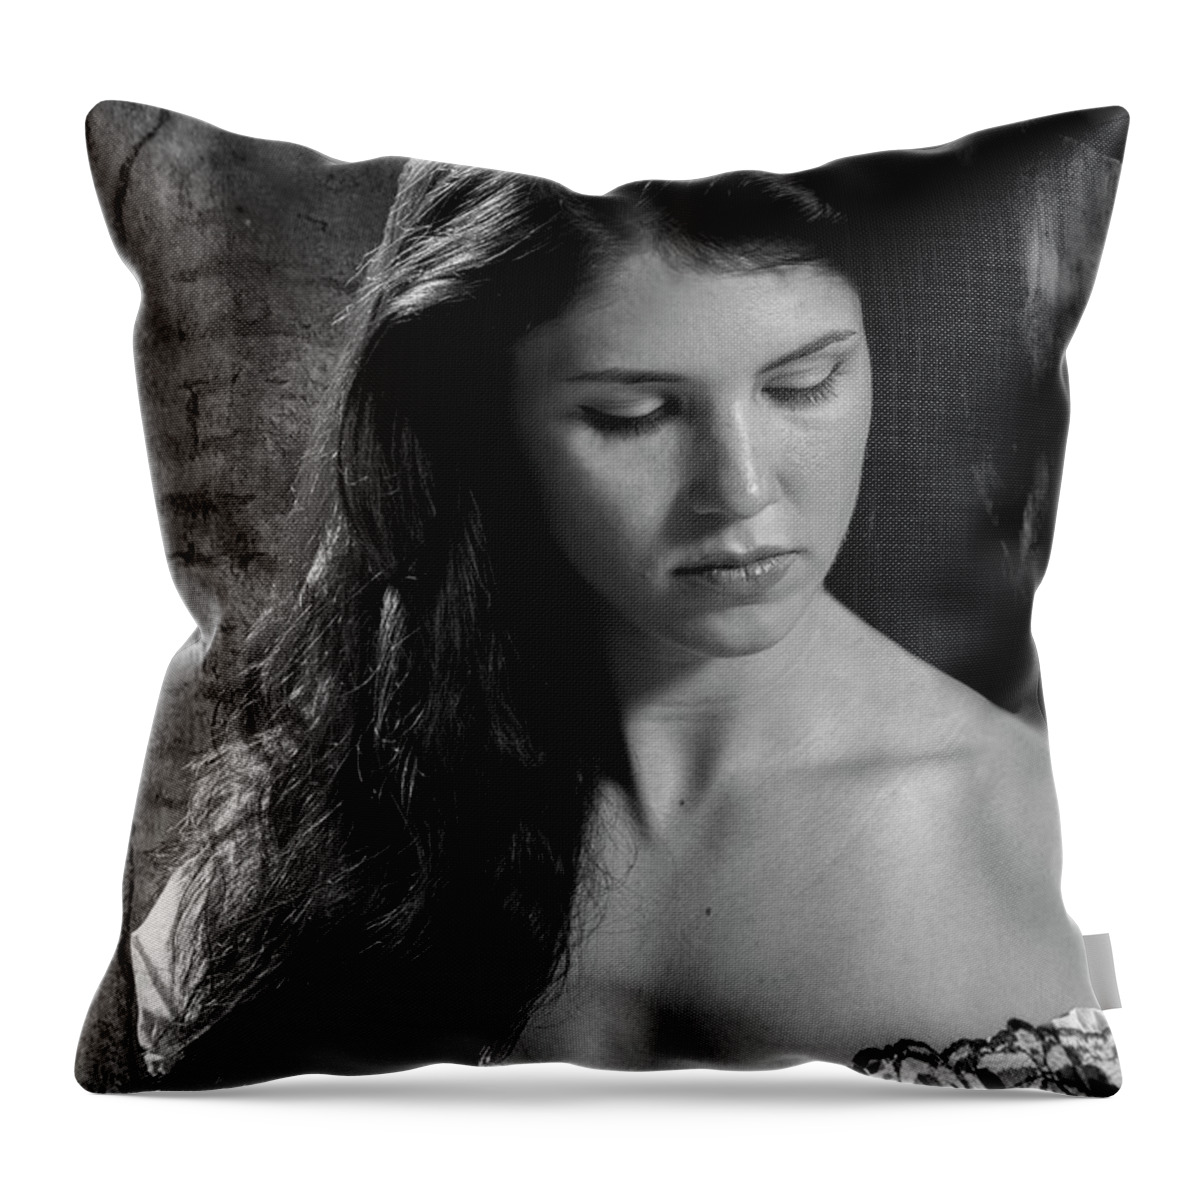 Spanish Throw Pillow featuring the photograph a Moment by Robert Och